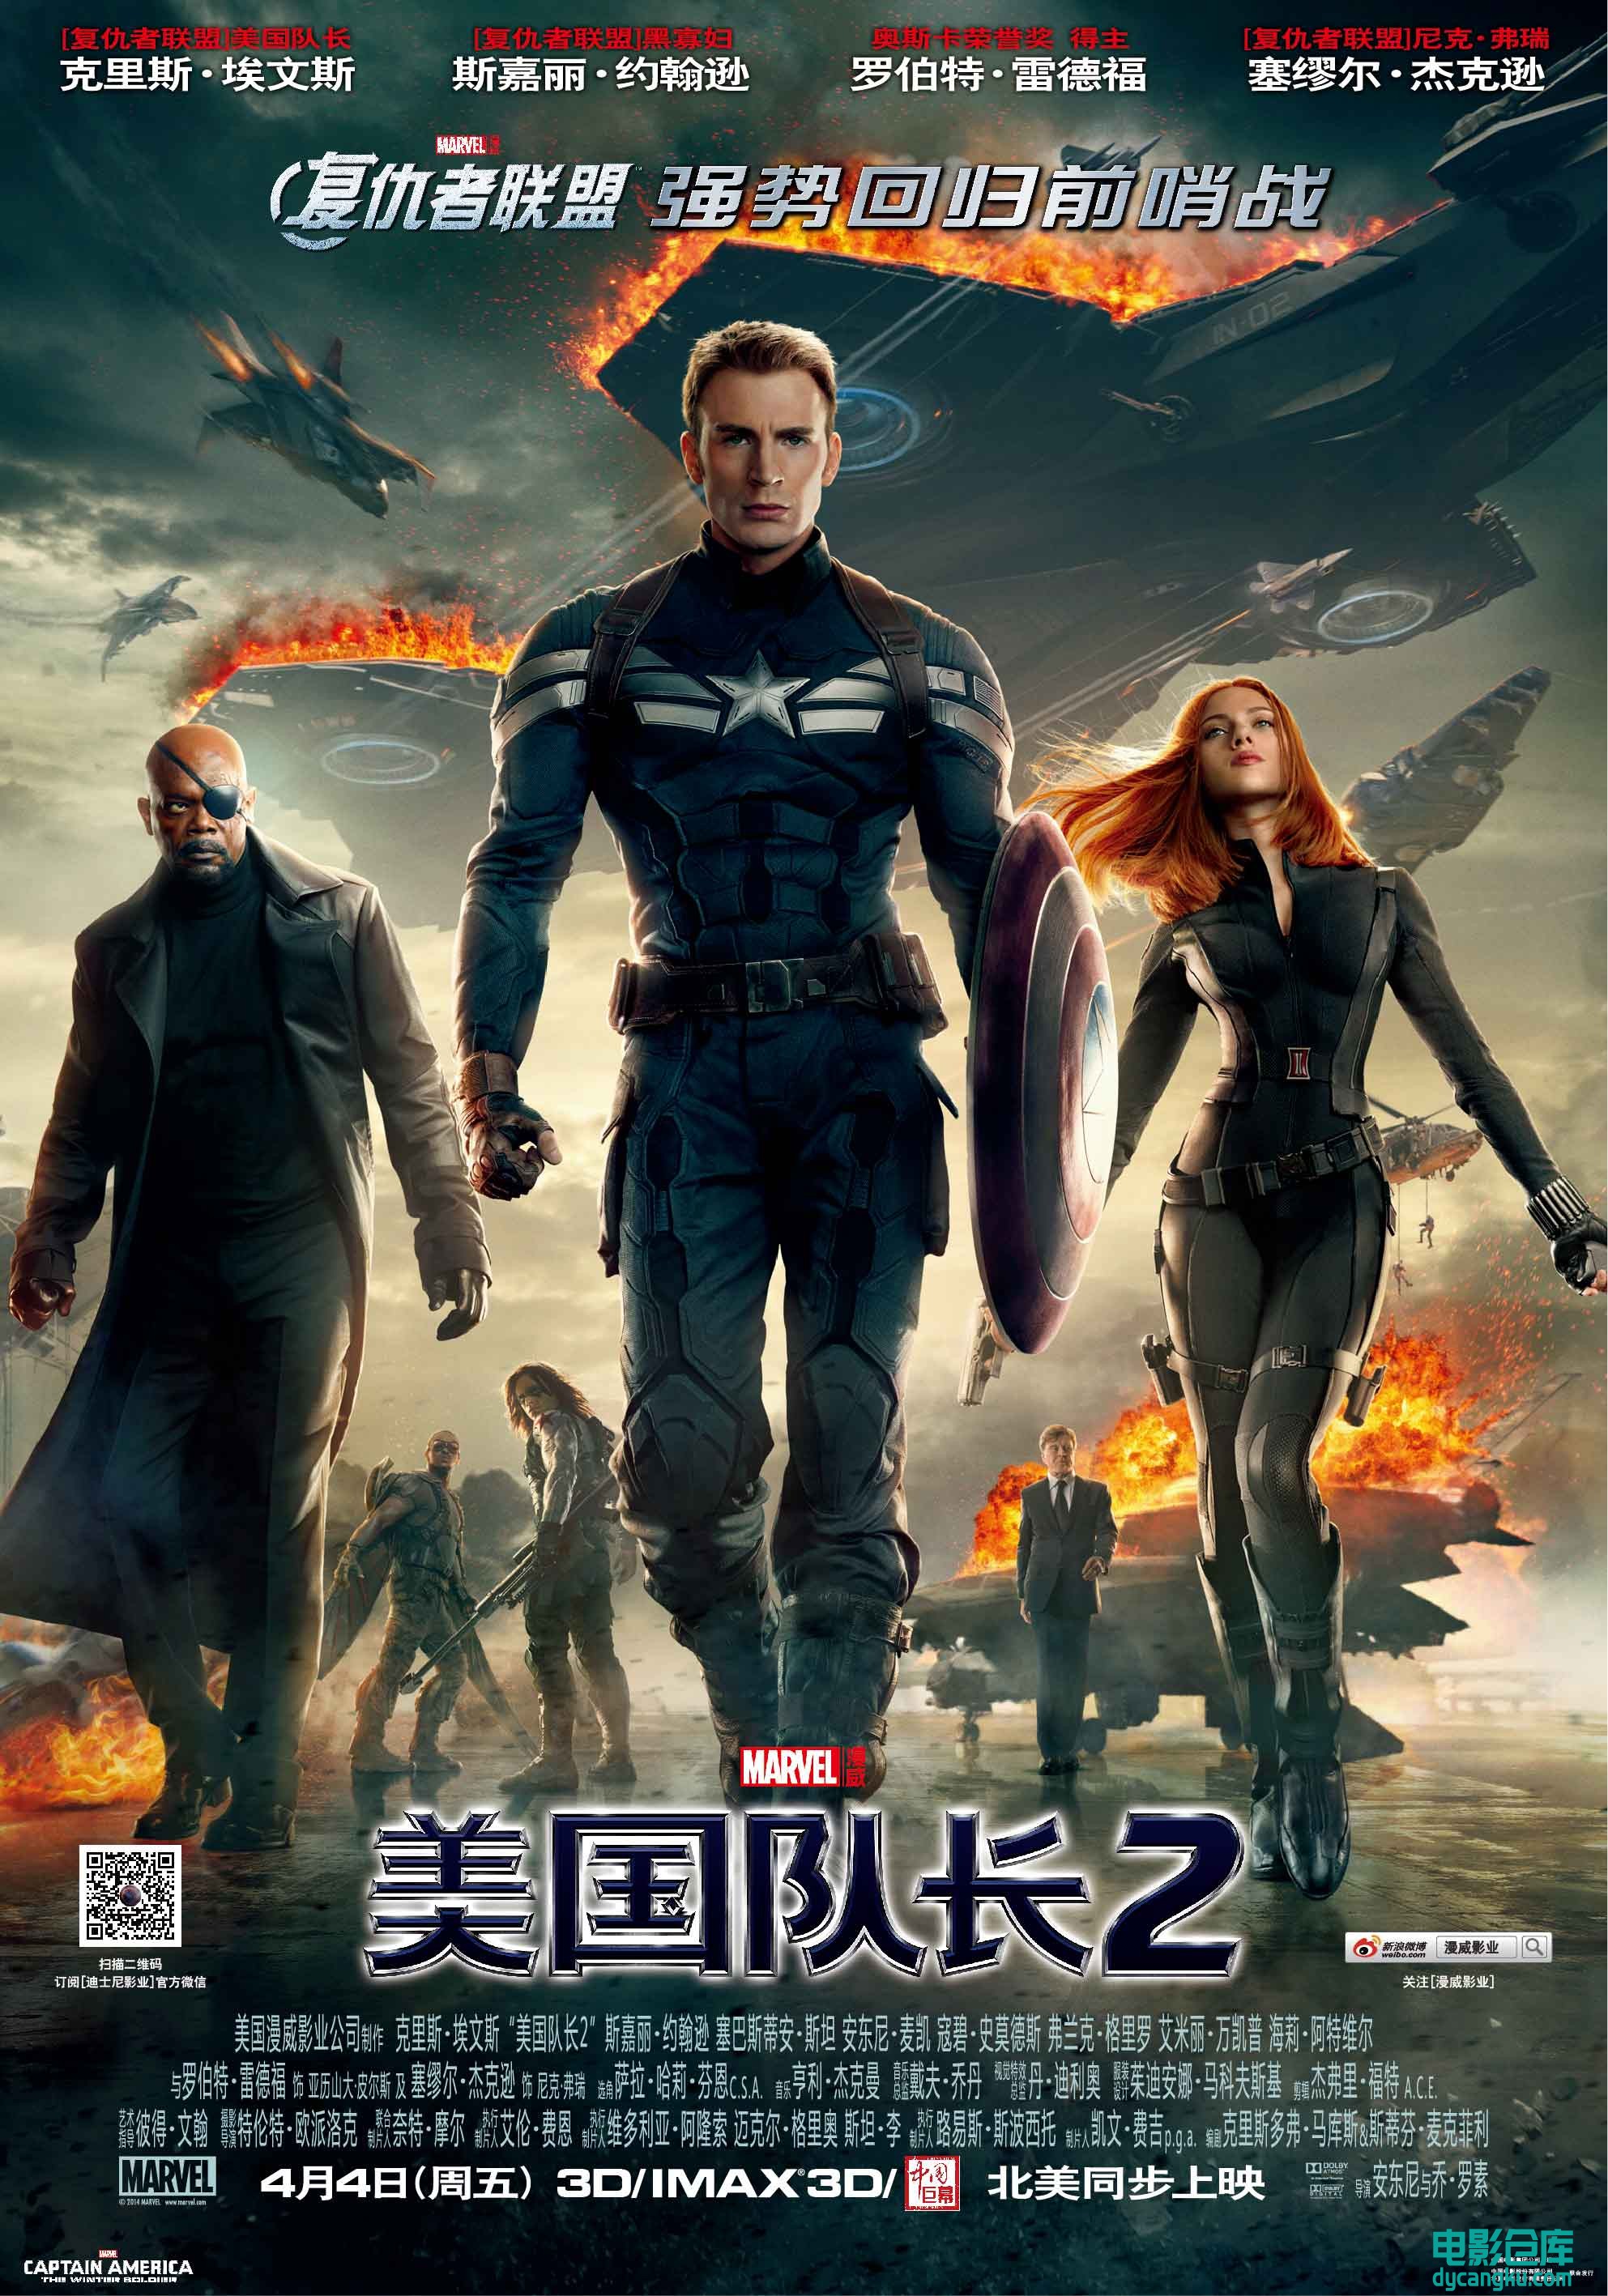 美国队长2 Captain America The Winter Soldier 2014.jpg